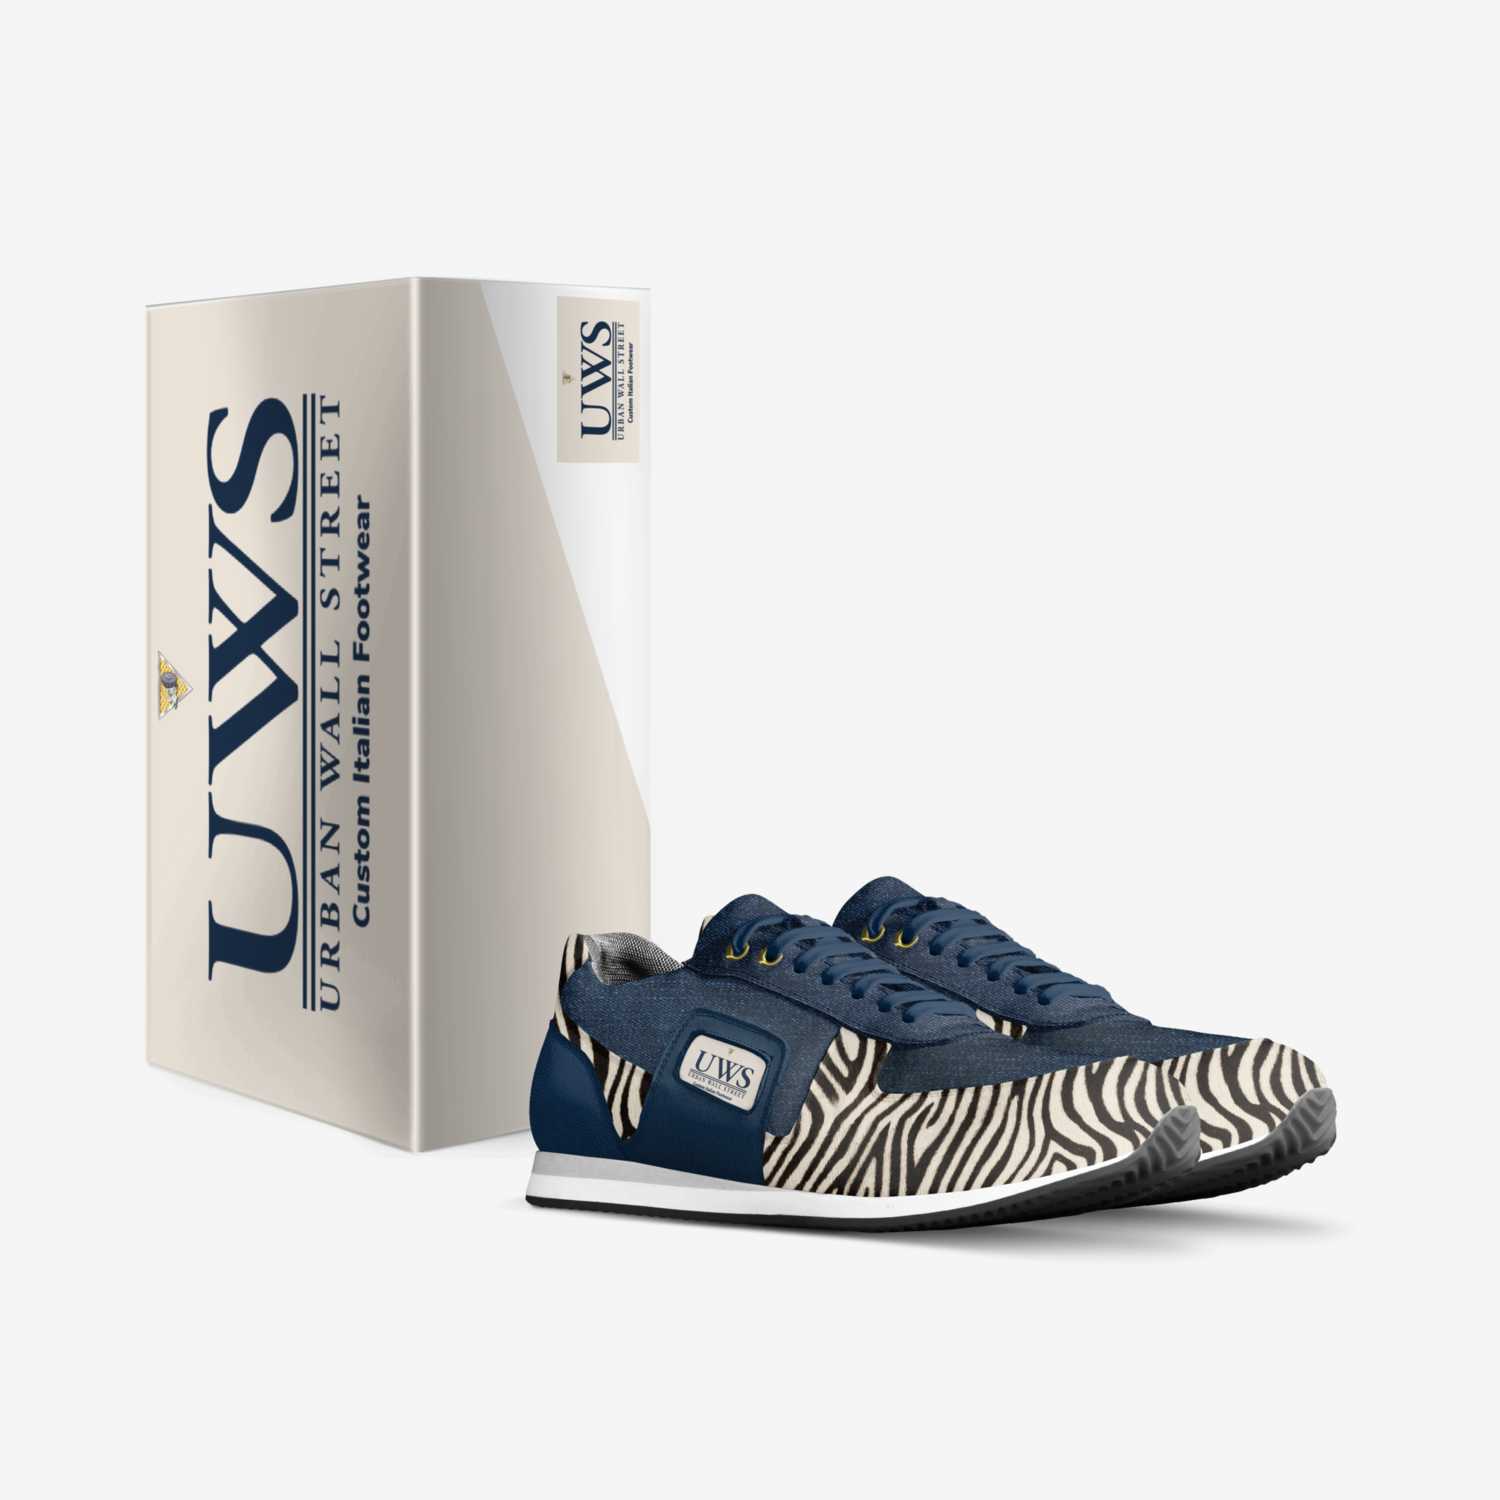 BLU ZEBRAZ custom made in Italy shoes by Urbanwallstreet Earl | Box view